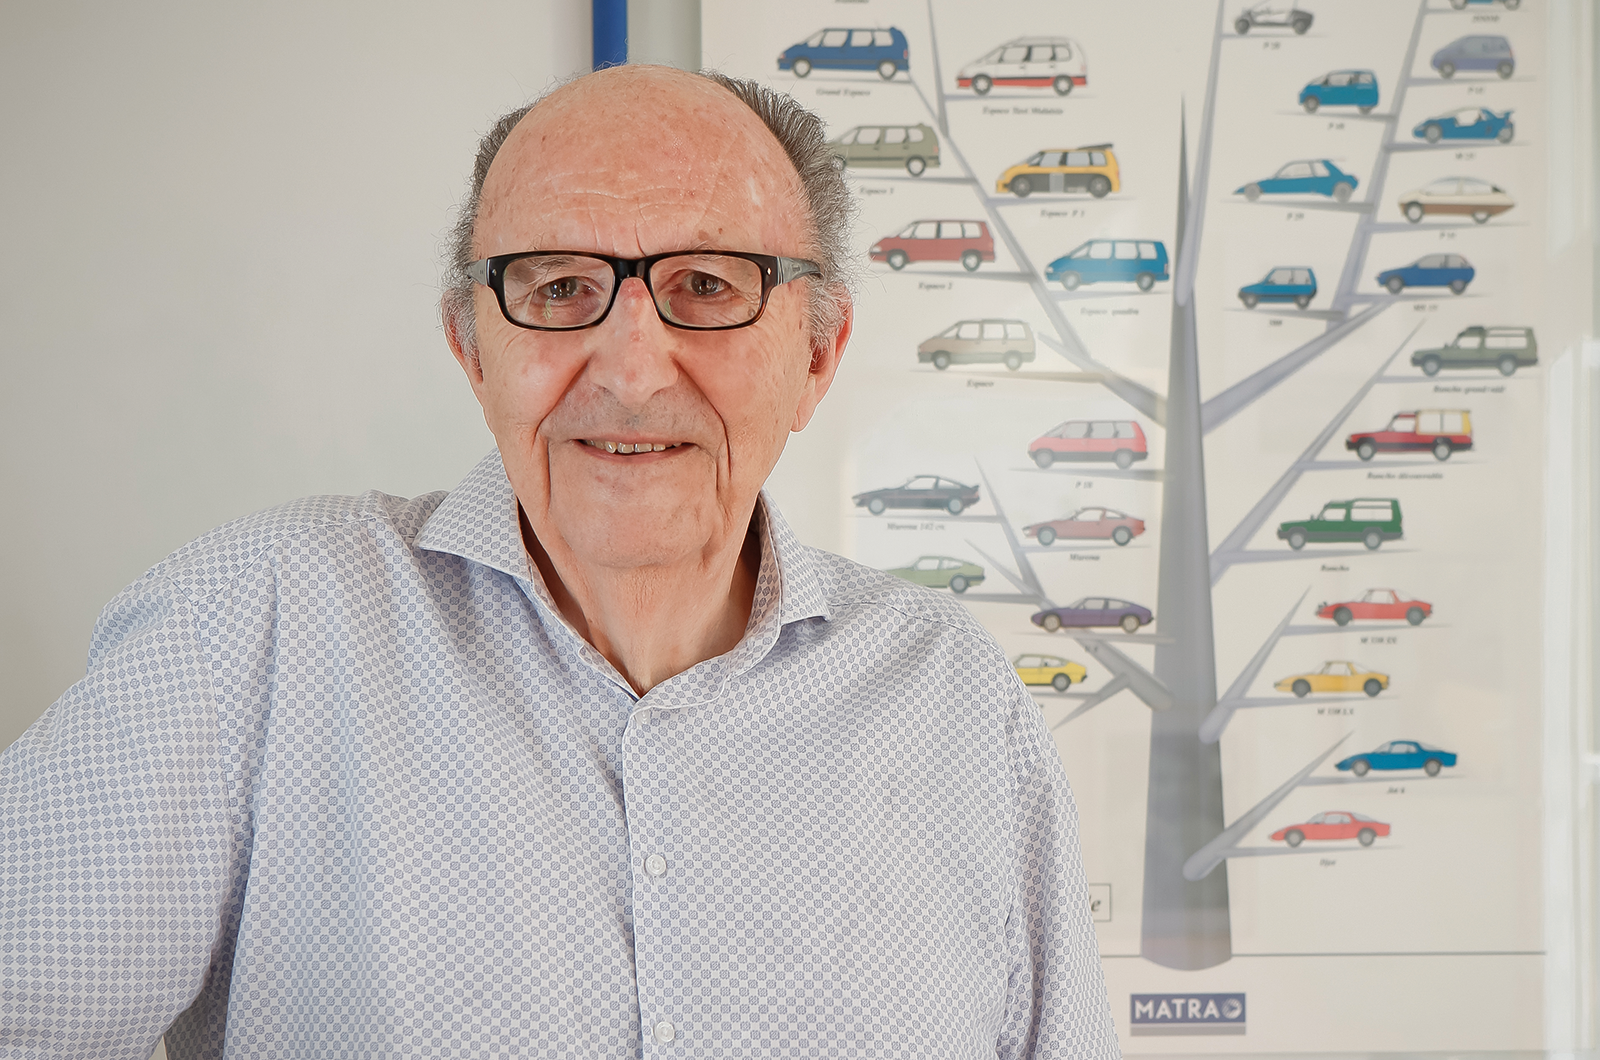 Classic & Sports Car – Matra man: meeting Philippe Guédon